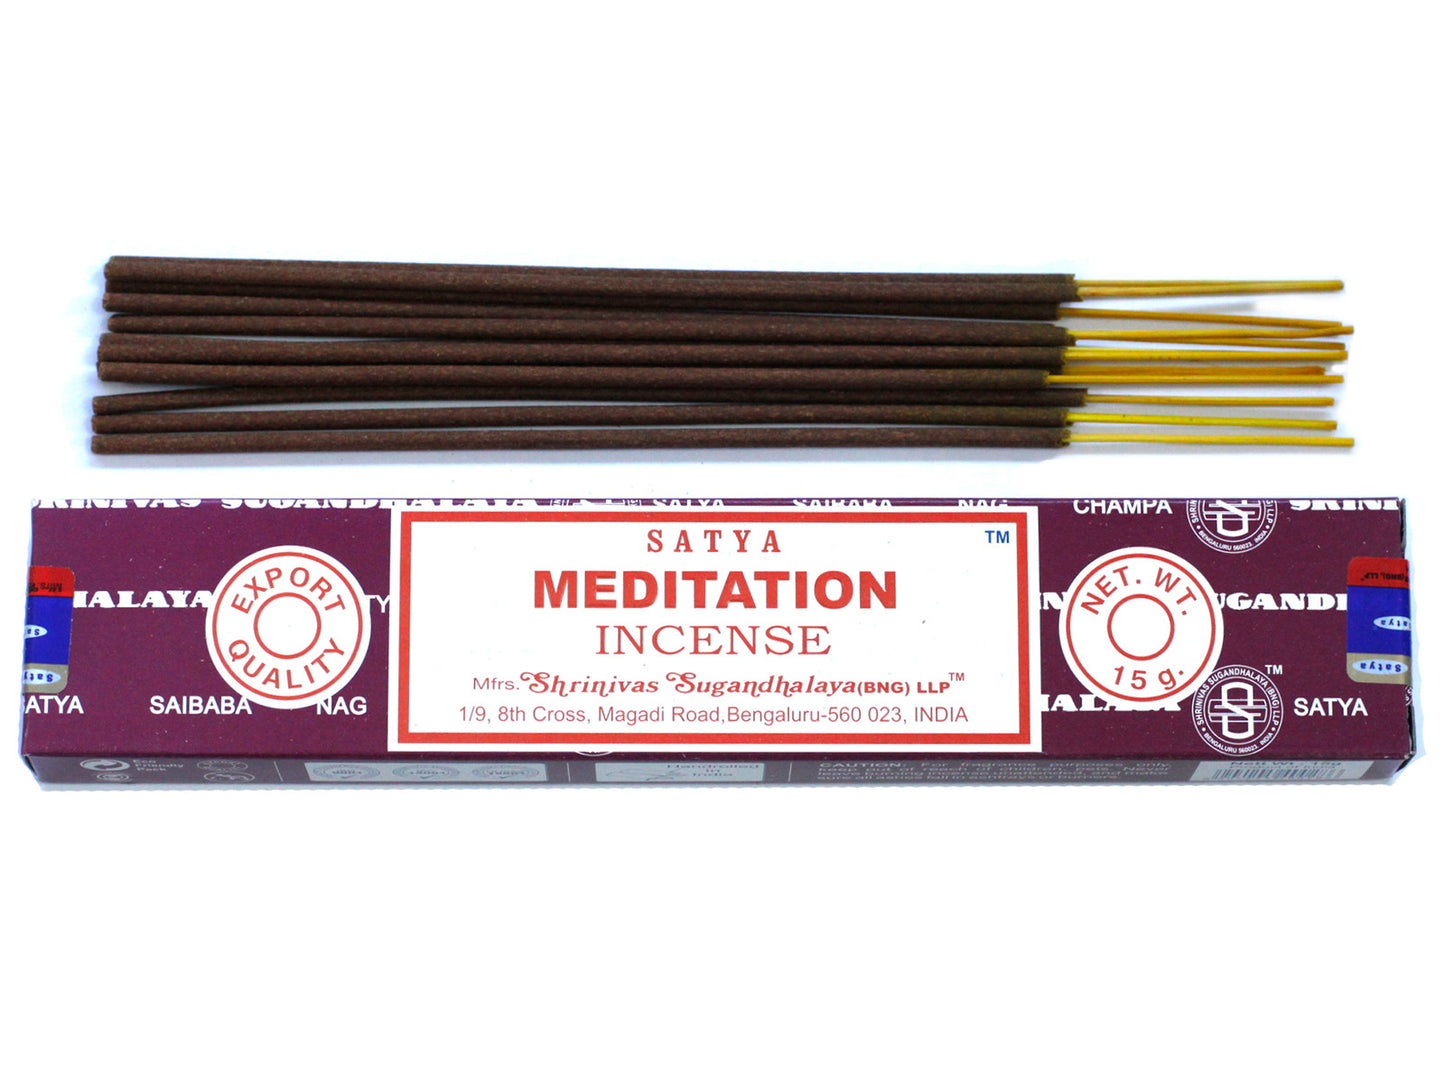 Satya Incense 15gm - Meditation